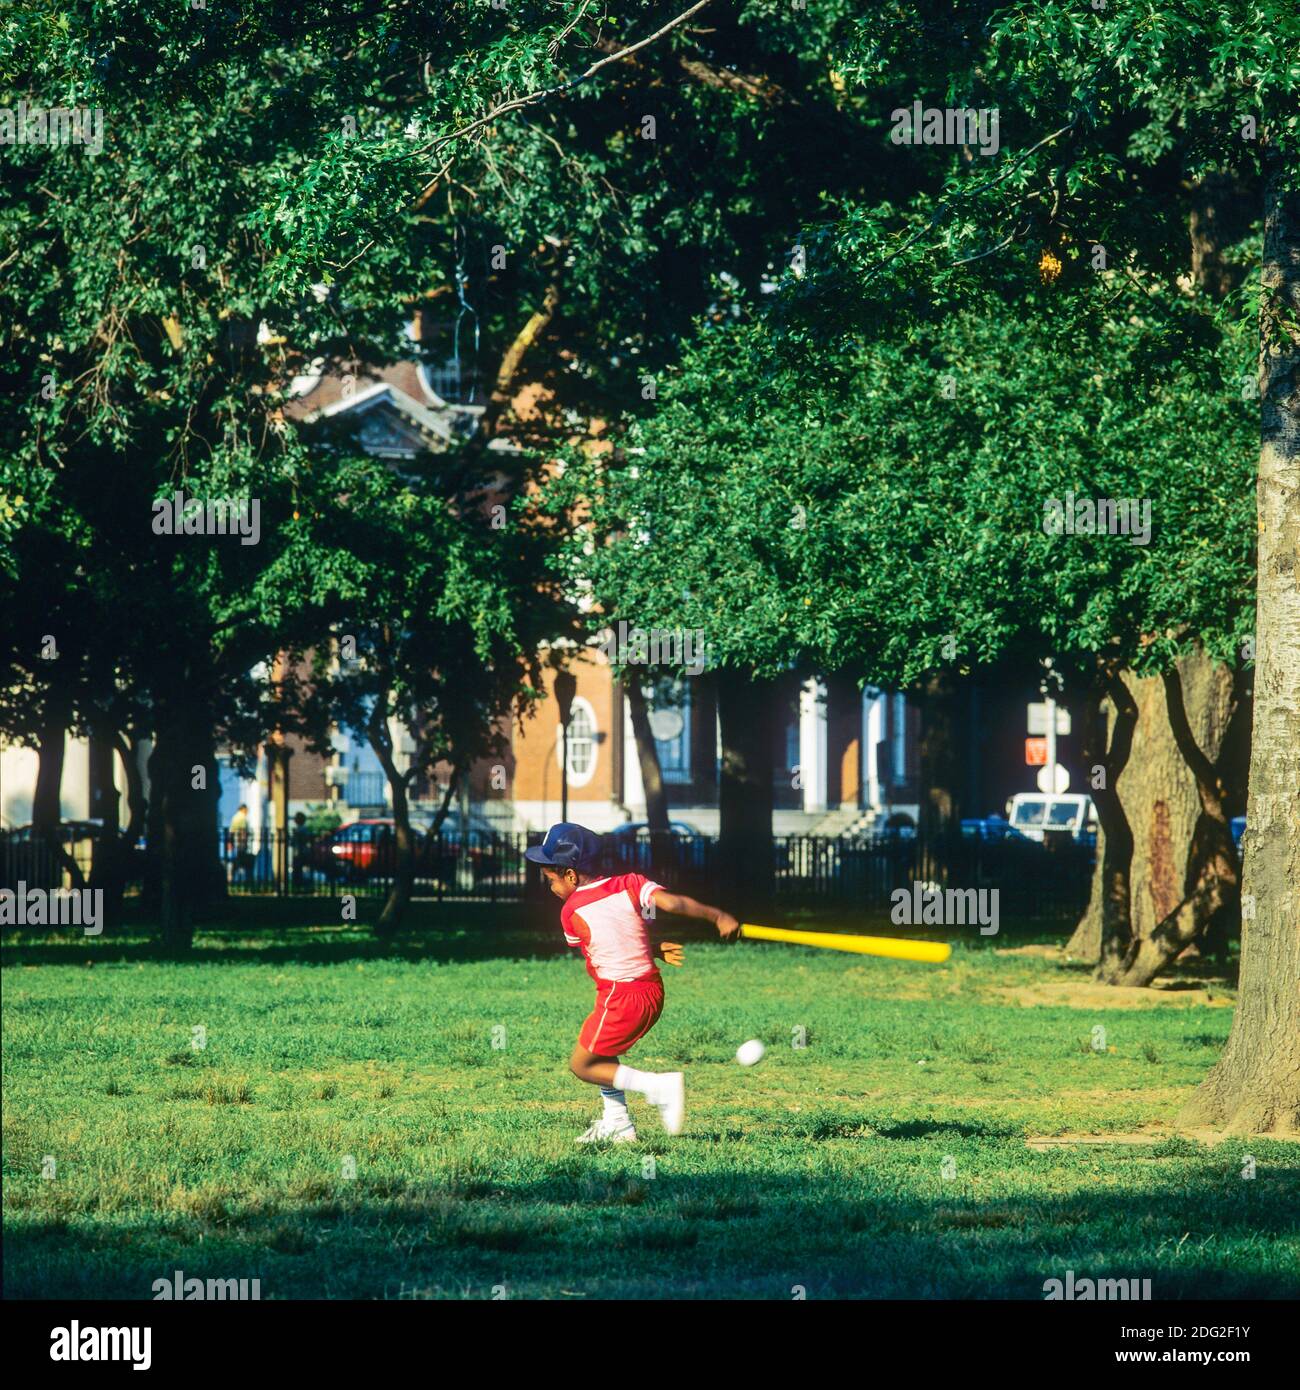 New York 1985, kleiner afroamerikanischer Junge, der Baseball spielt, schwingender Baseballschläger, Battery Park, Lower Manhattan, New York City, NY, NYC, USA, Stockfoto